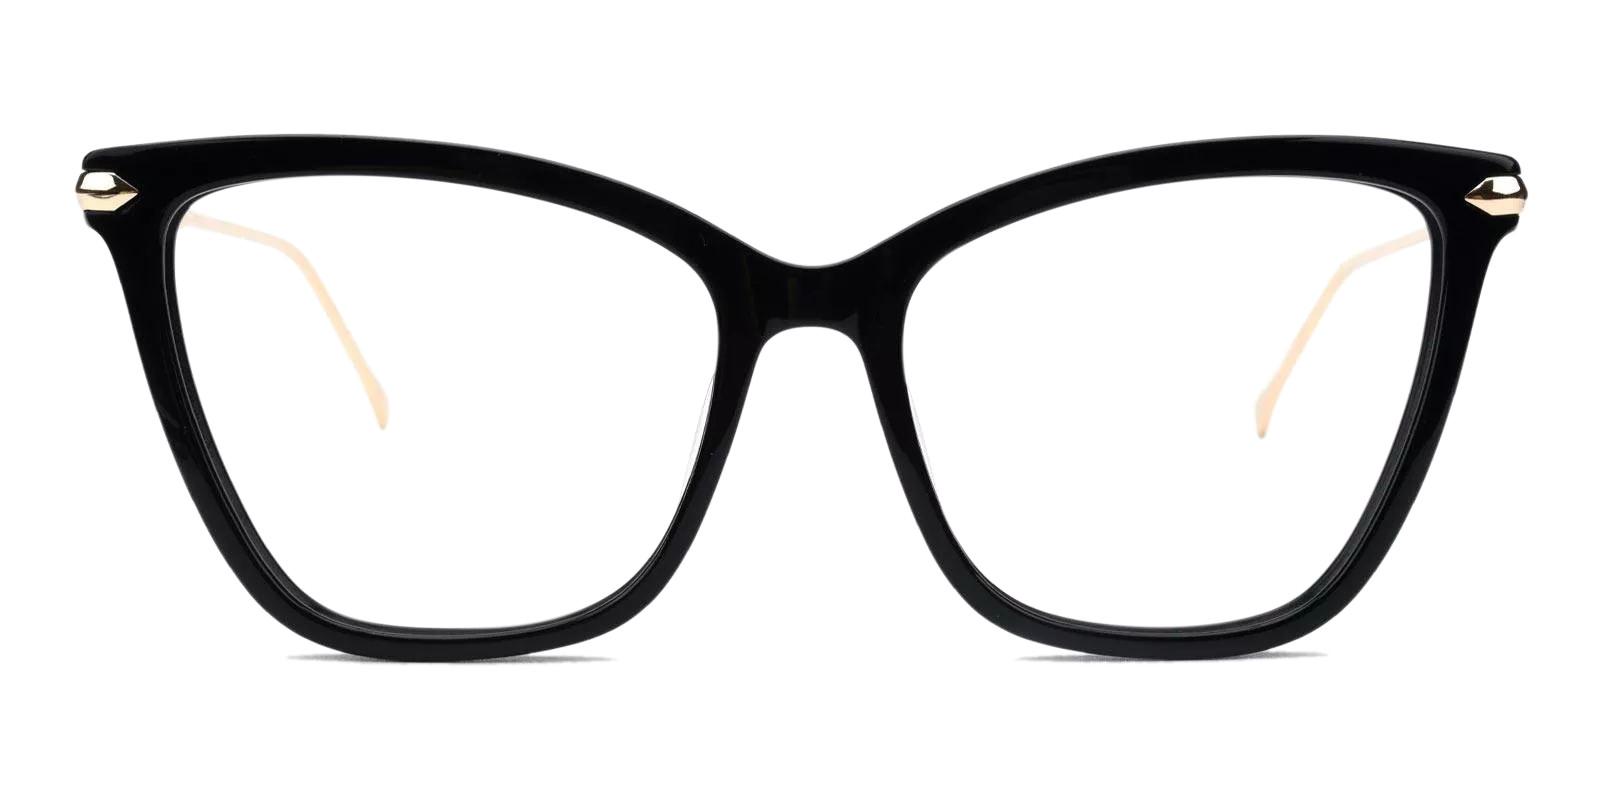 Gosse Black Acetate , Metal Eyeglasses , Fashion , UniversalBridgeFit Frames from ABBE Glasses